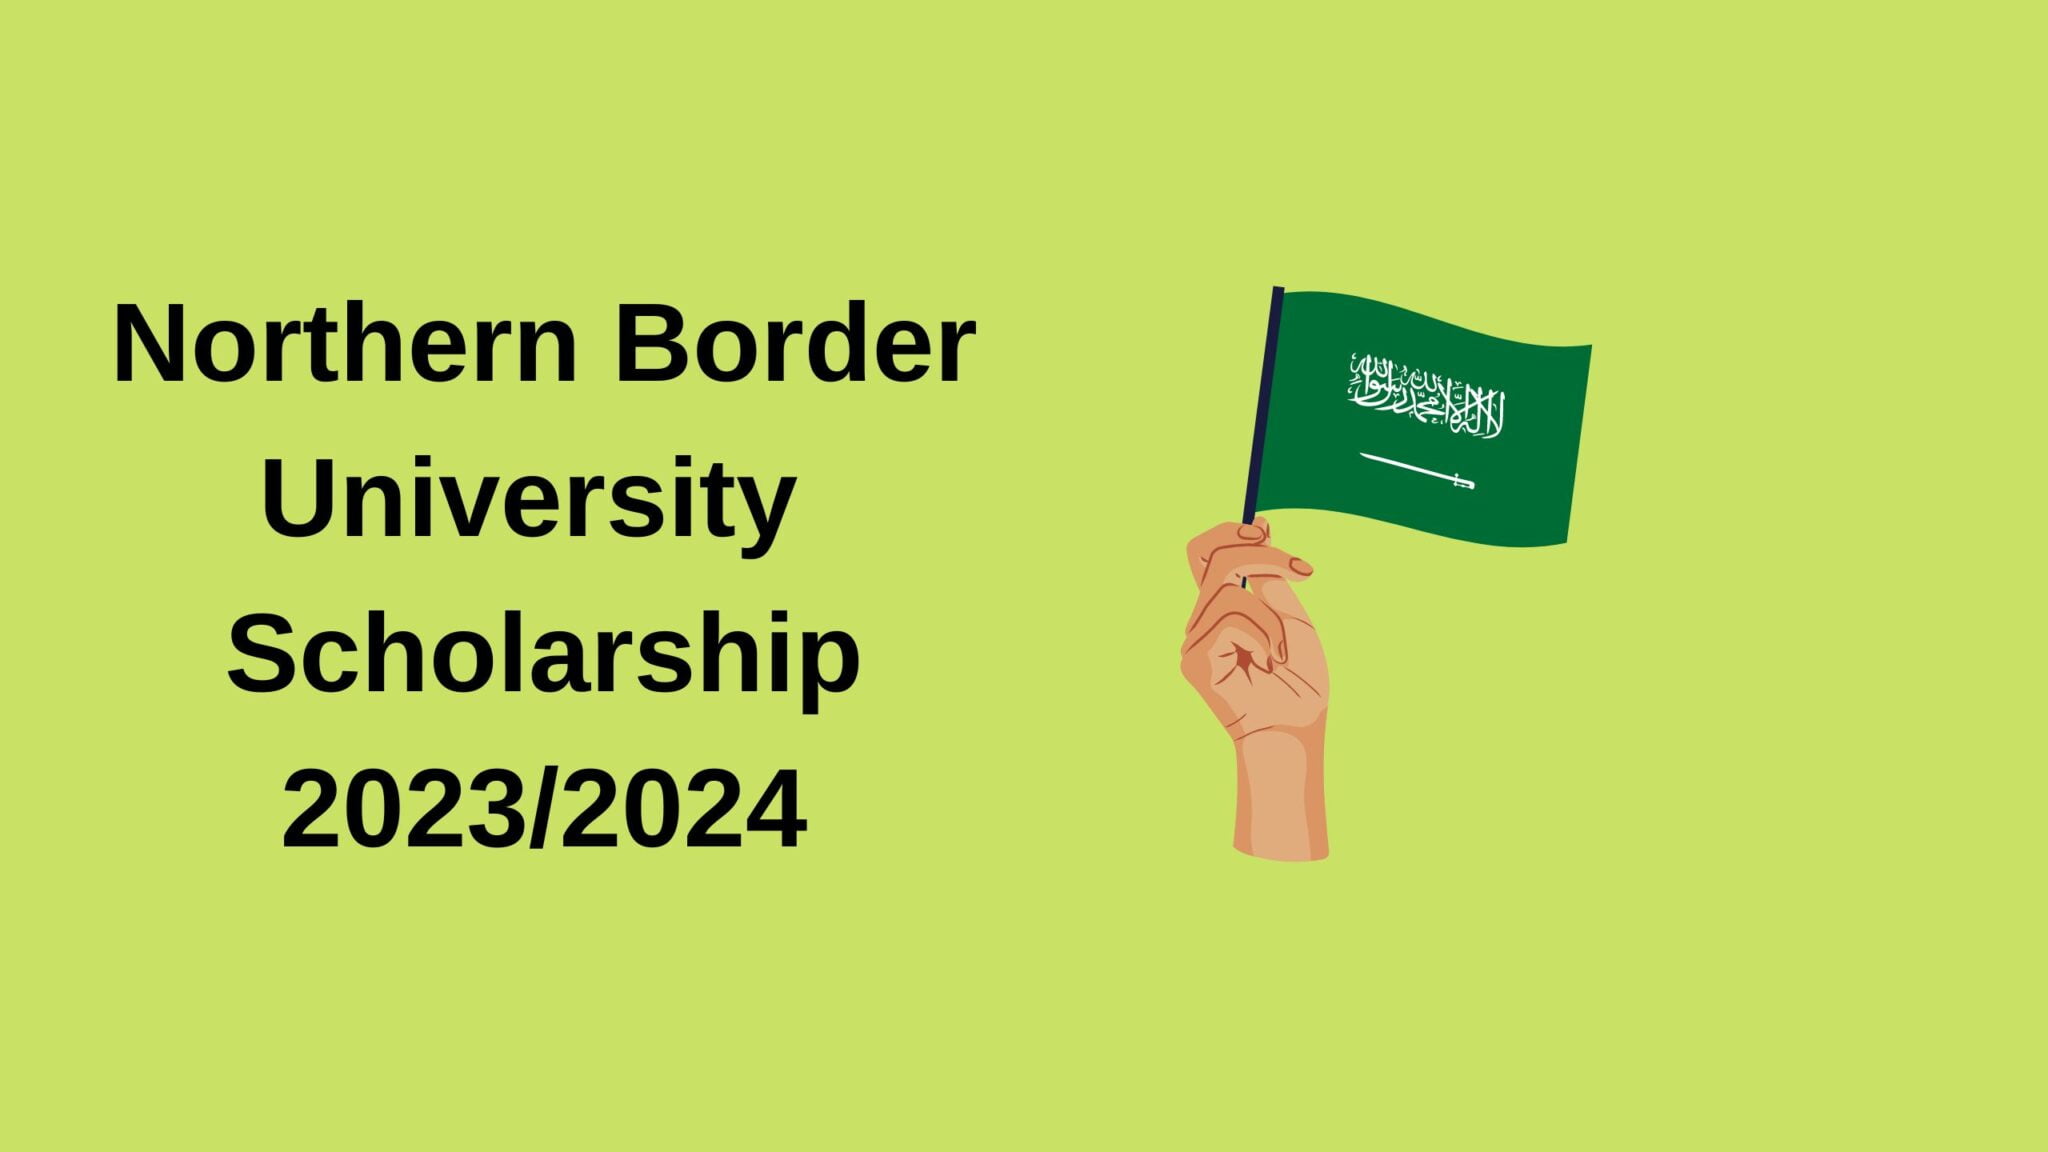 Northern Border University Scholarship 2023/2024